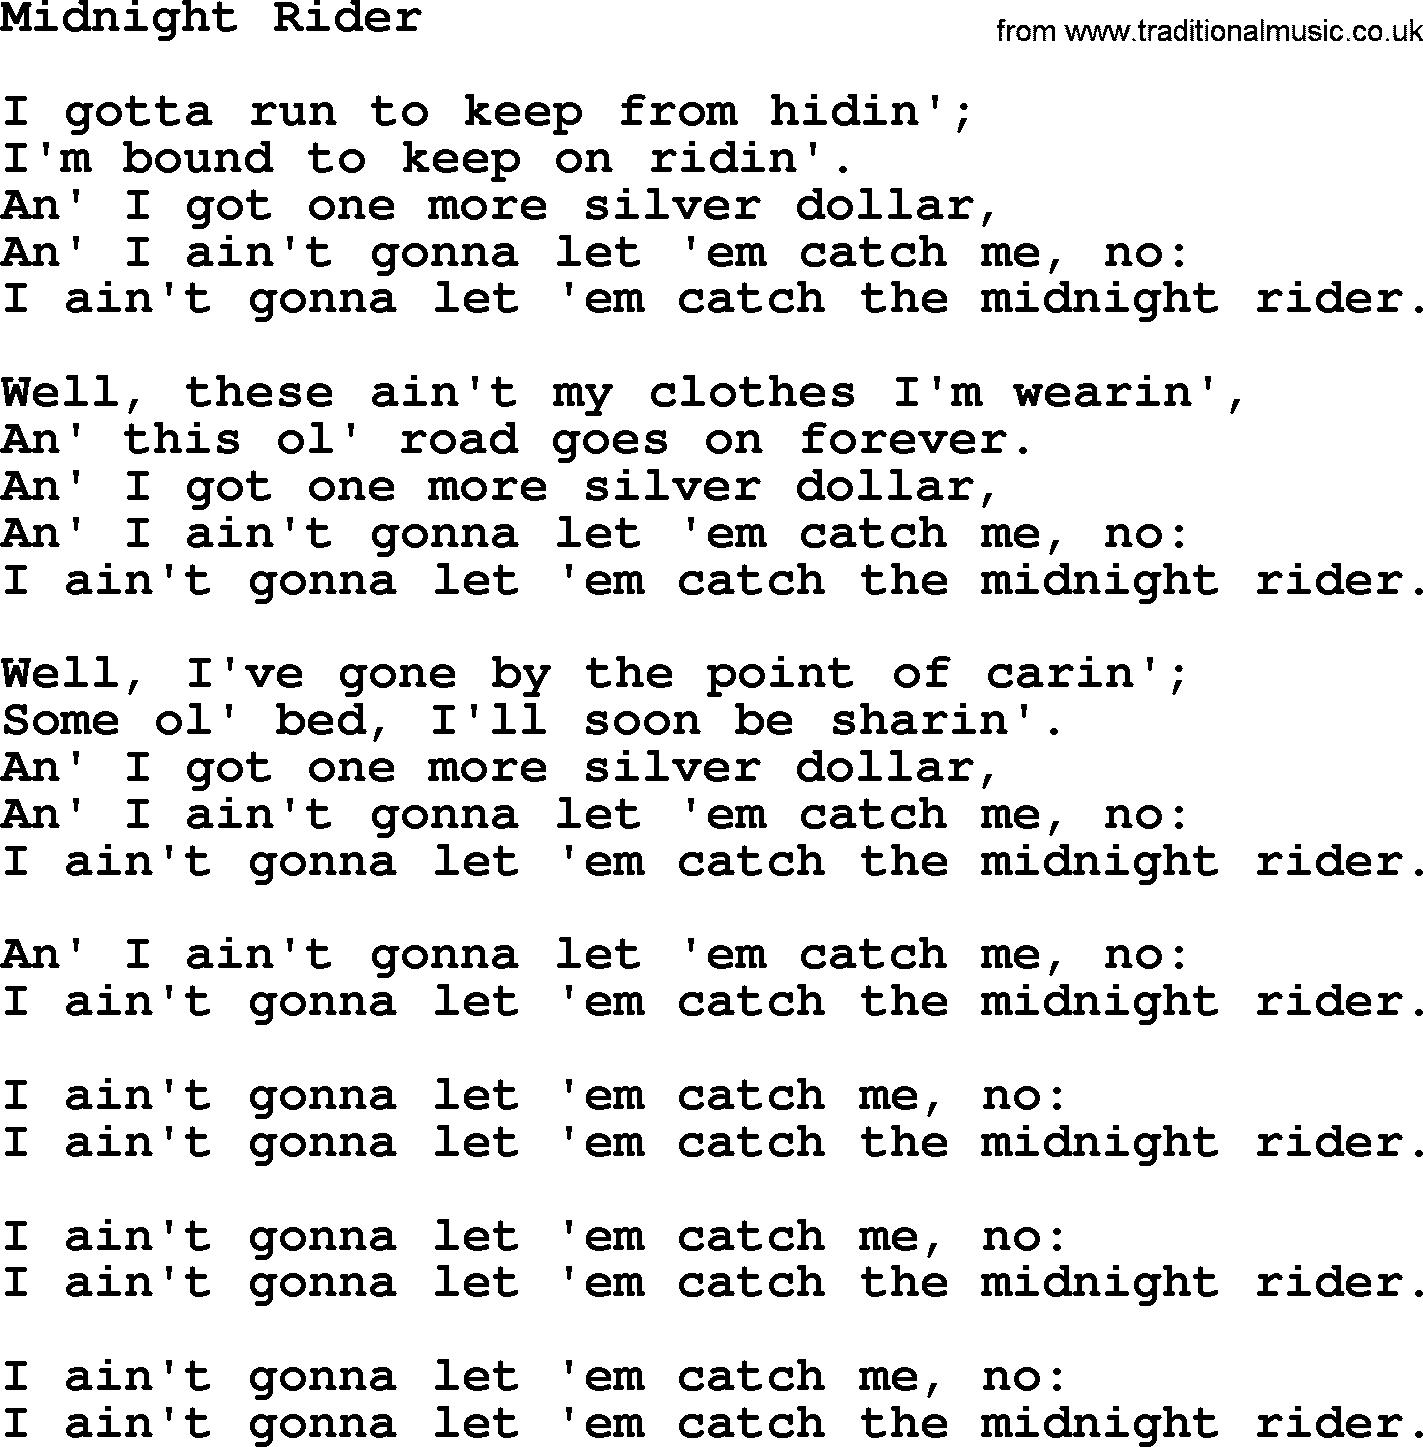 Willie Nelson song: Midnight Rider lyrics